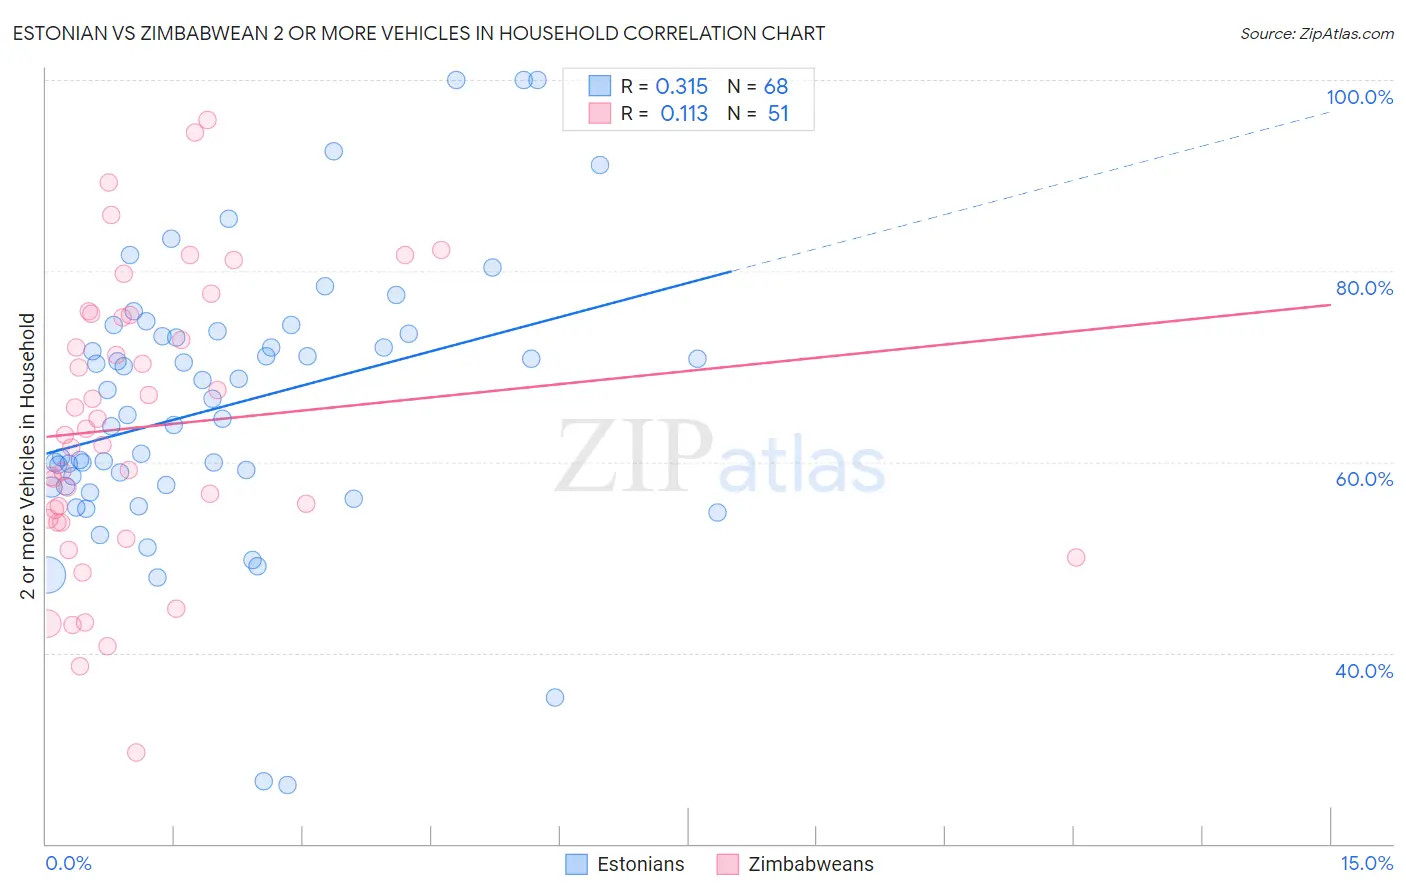 Estonian vs Zimbabwean 2 or more Vehicles in Household